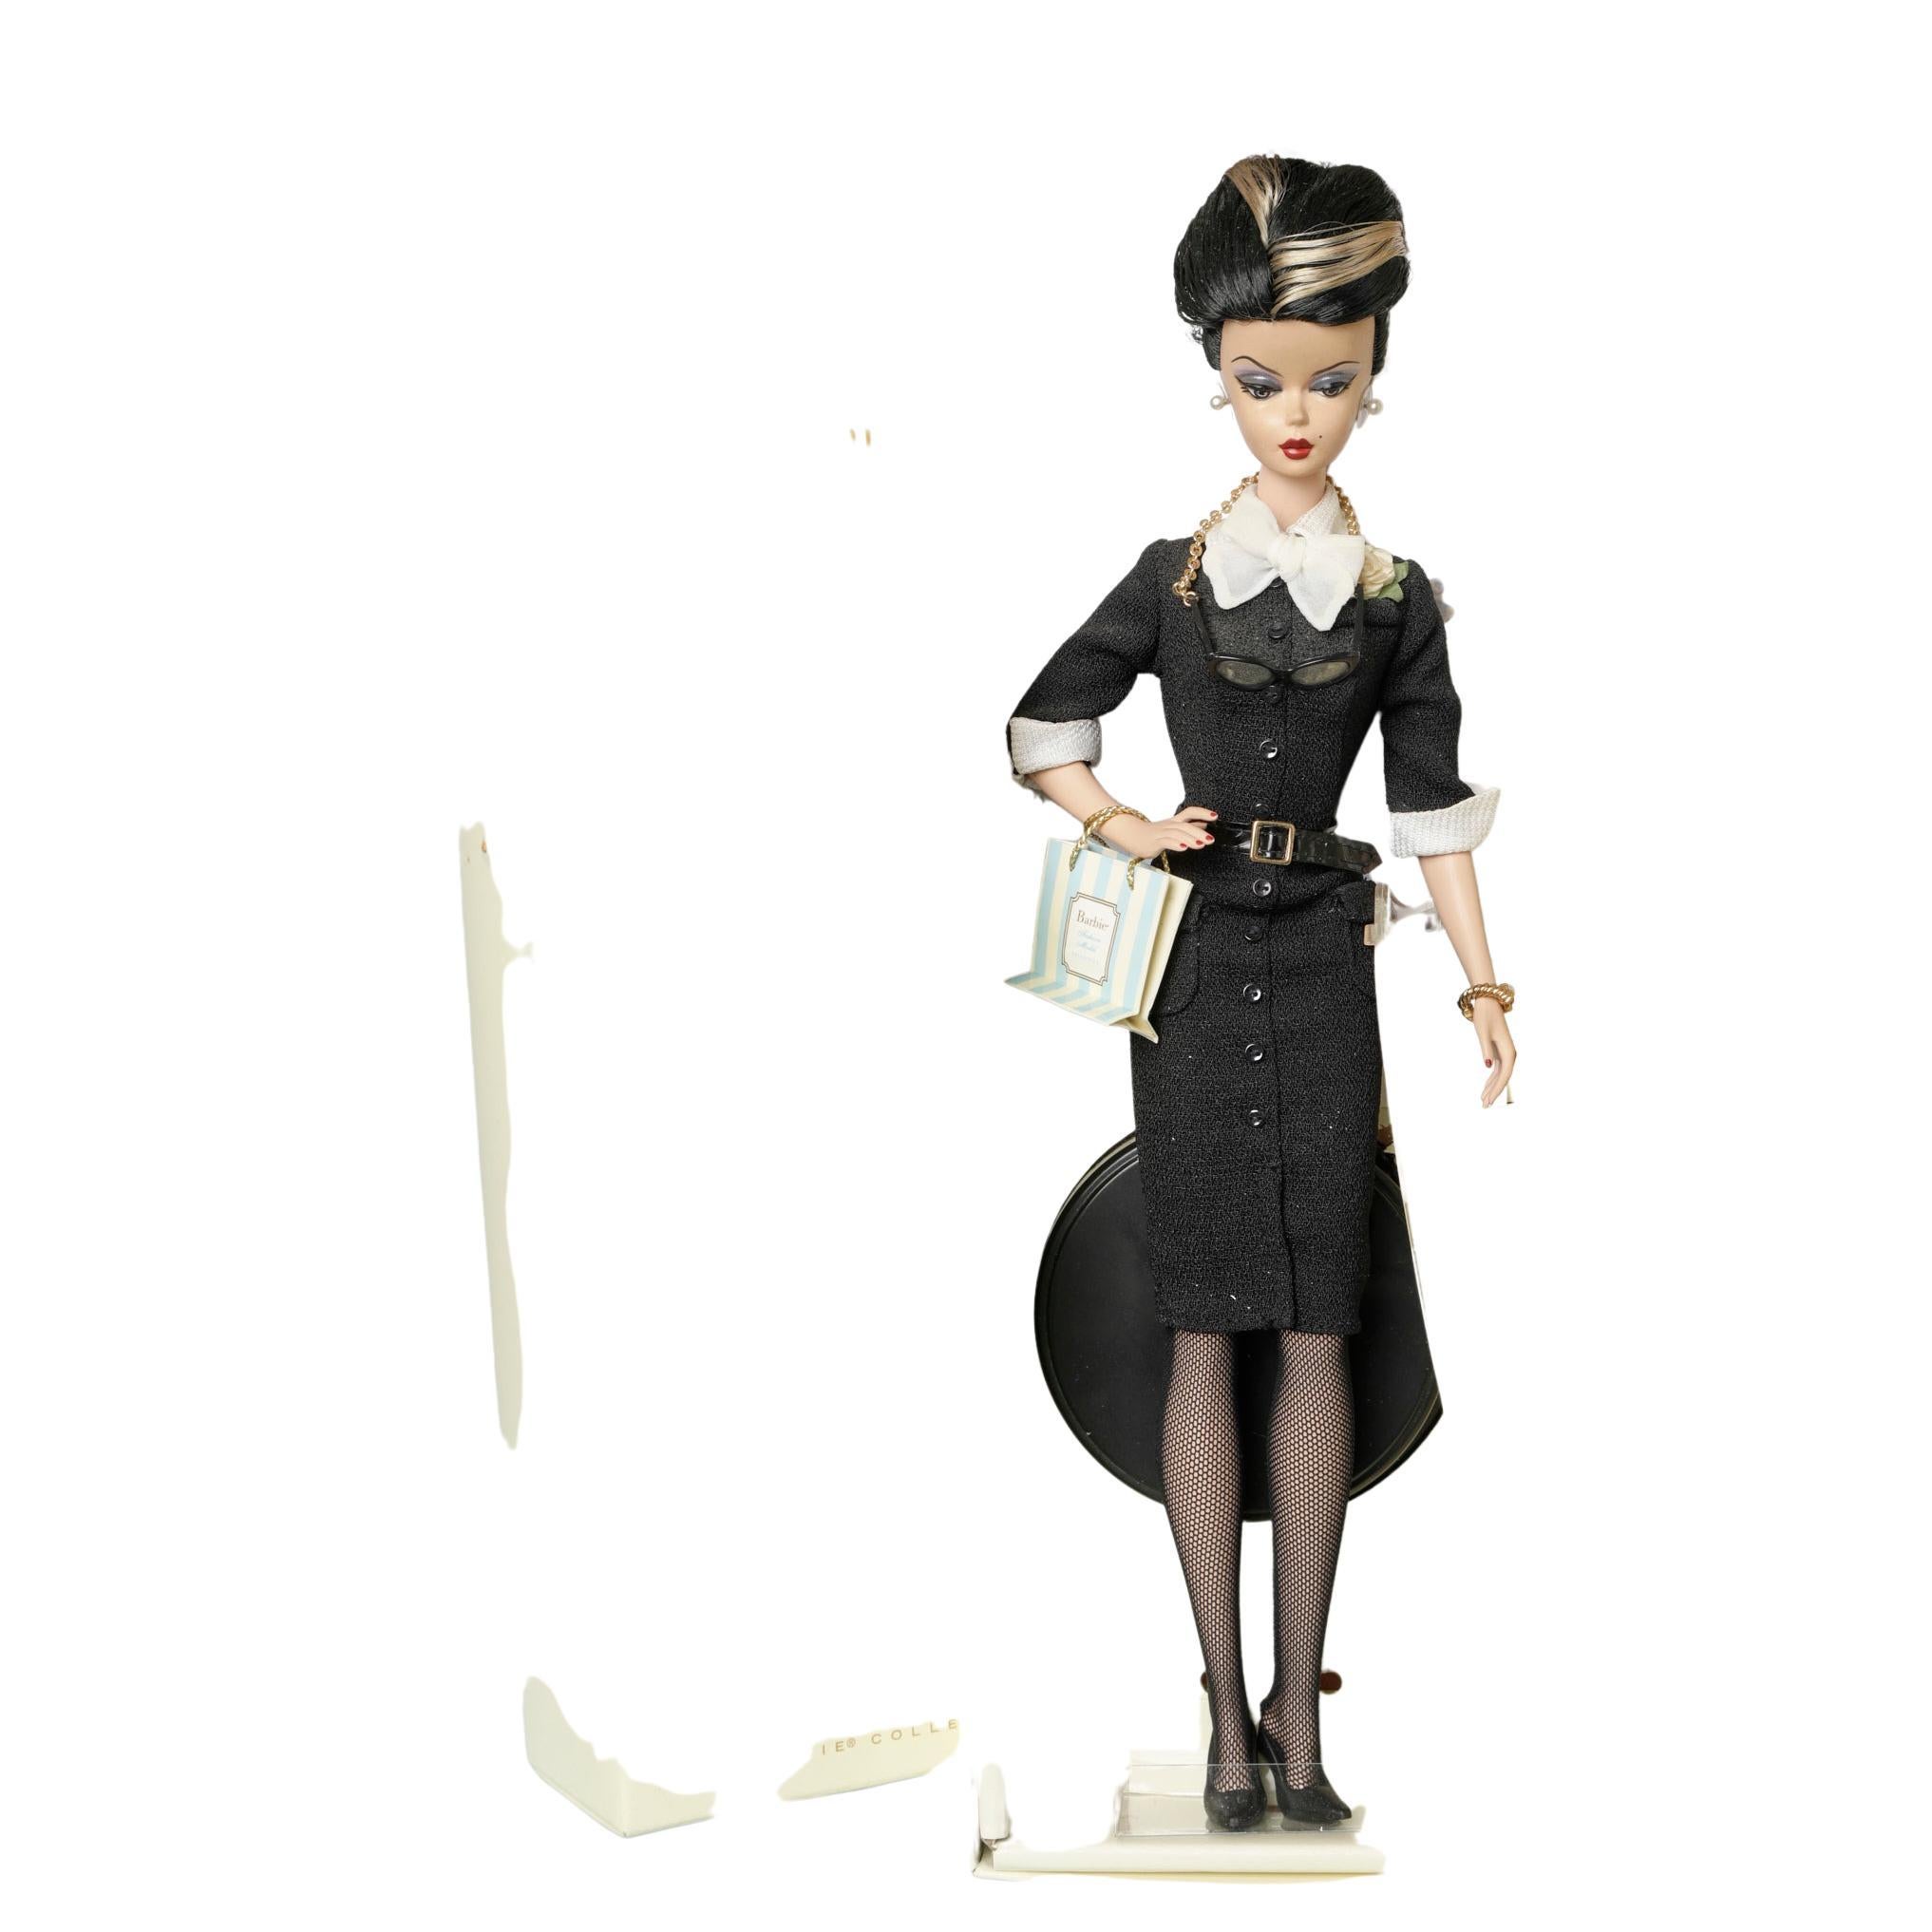 Barbie Fashion Model / " The shop girl" / Gold Label For Sale at 1stDibs